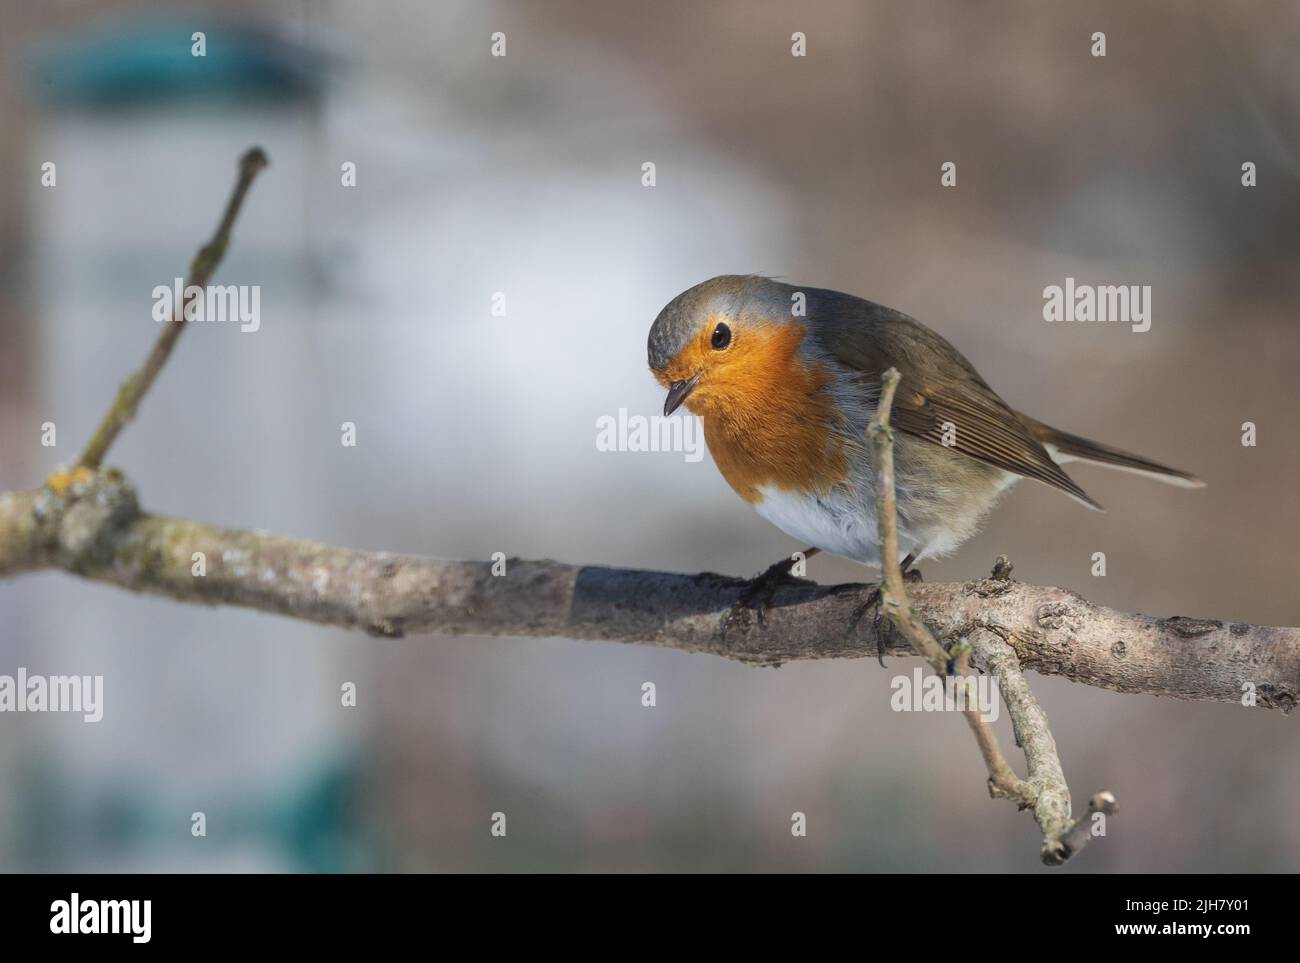 European robin (Erithacus rubecula) on branch looking at camera, Podlaskie Voivodeship, Poland, Europe Stock Photo